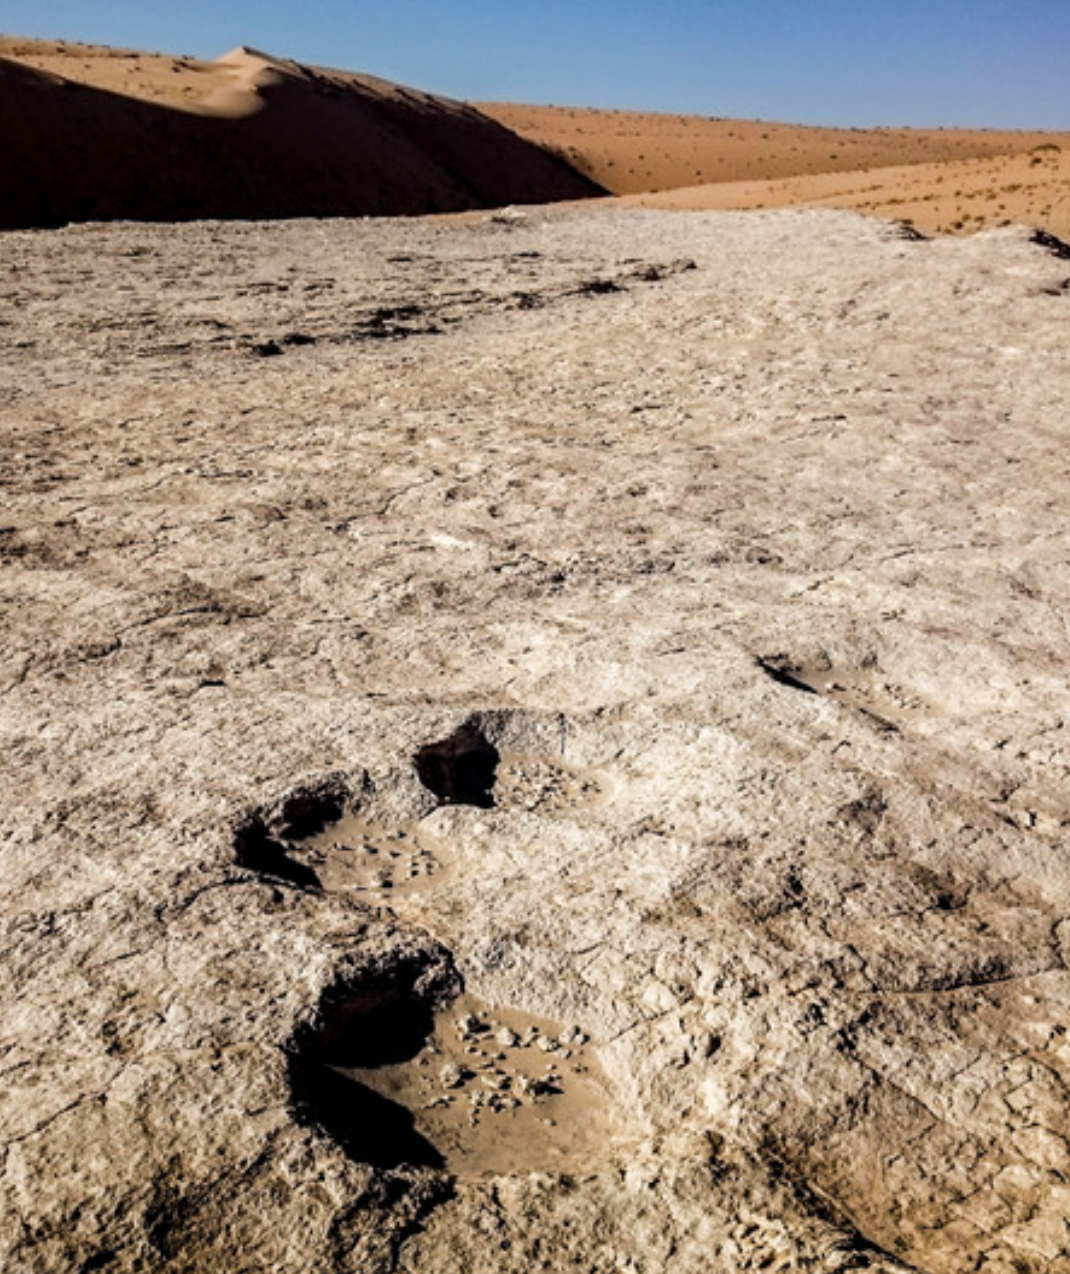 Elephant tracks found at the site.  (Image: Stewart et al., 2020)